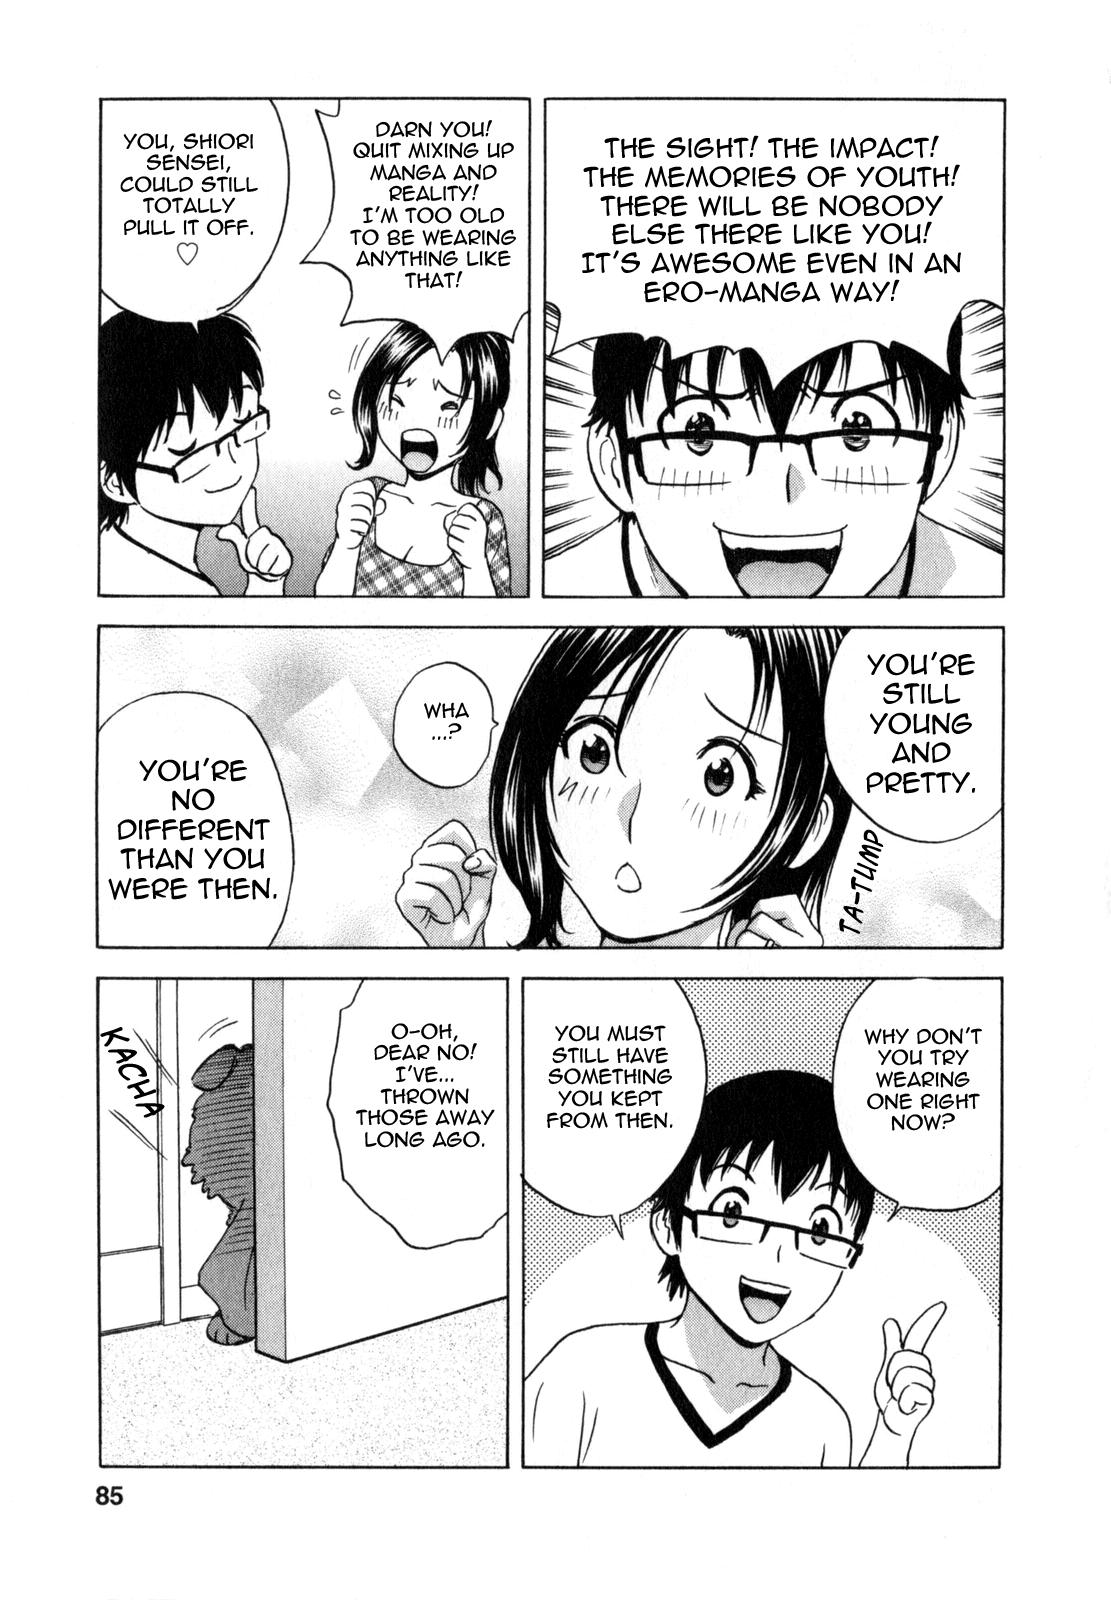 [Hidemaru] Life with Married Women Just Like a Manga 1 - Ch. 1-9 [English] {Tadanohito} 89